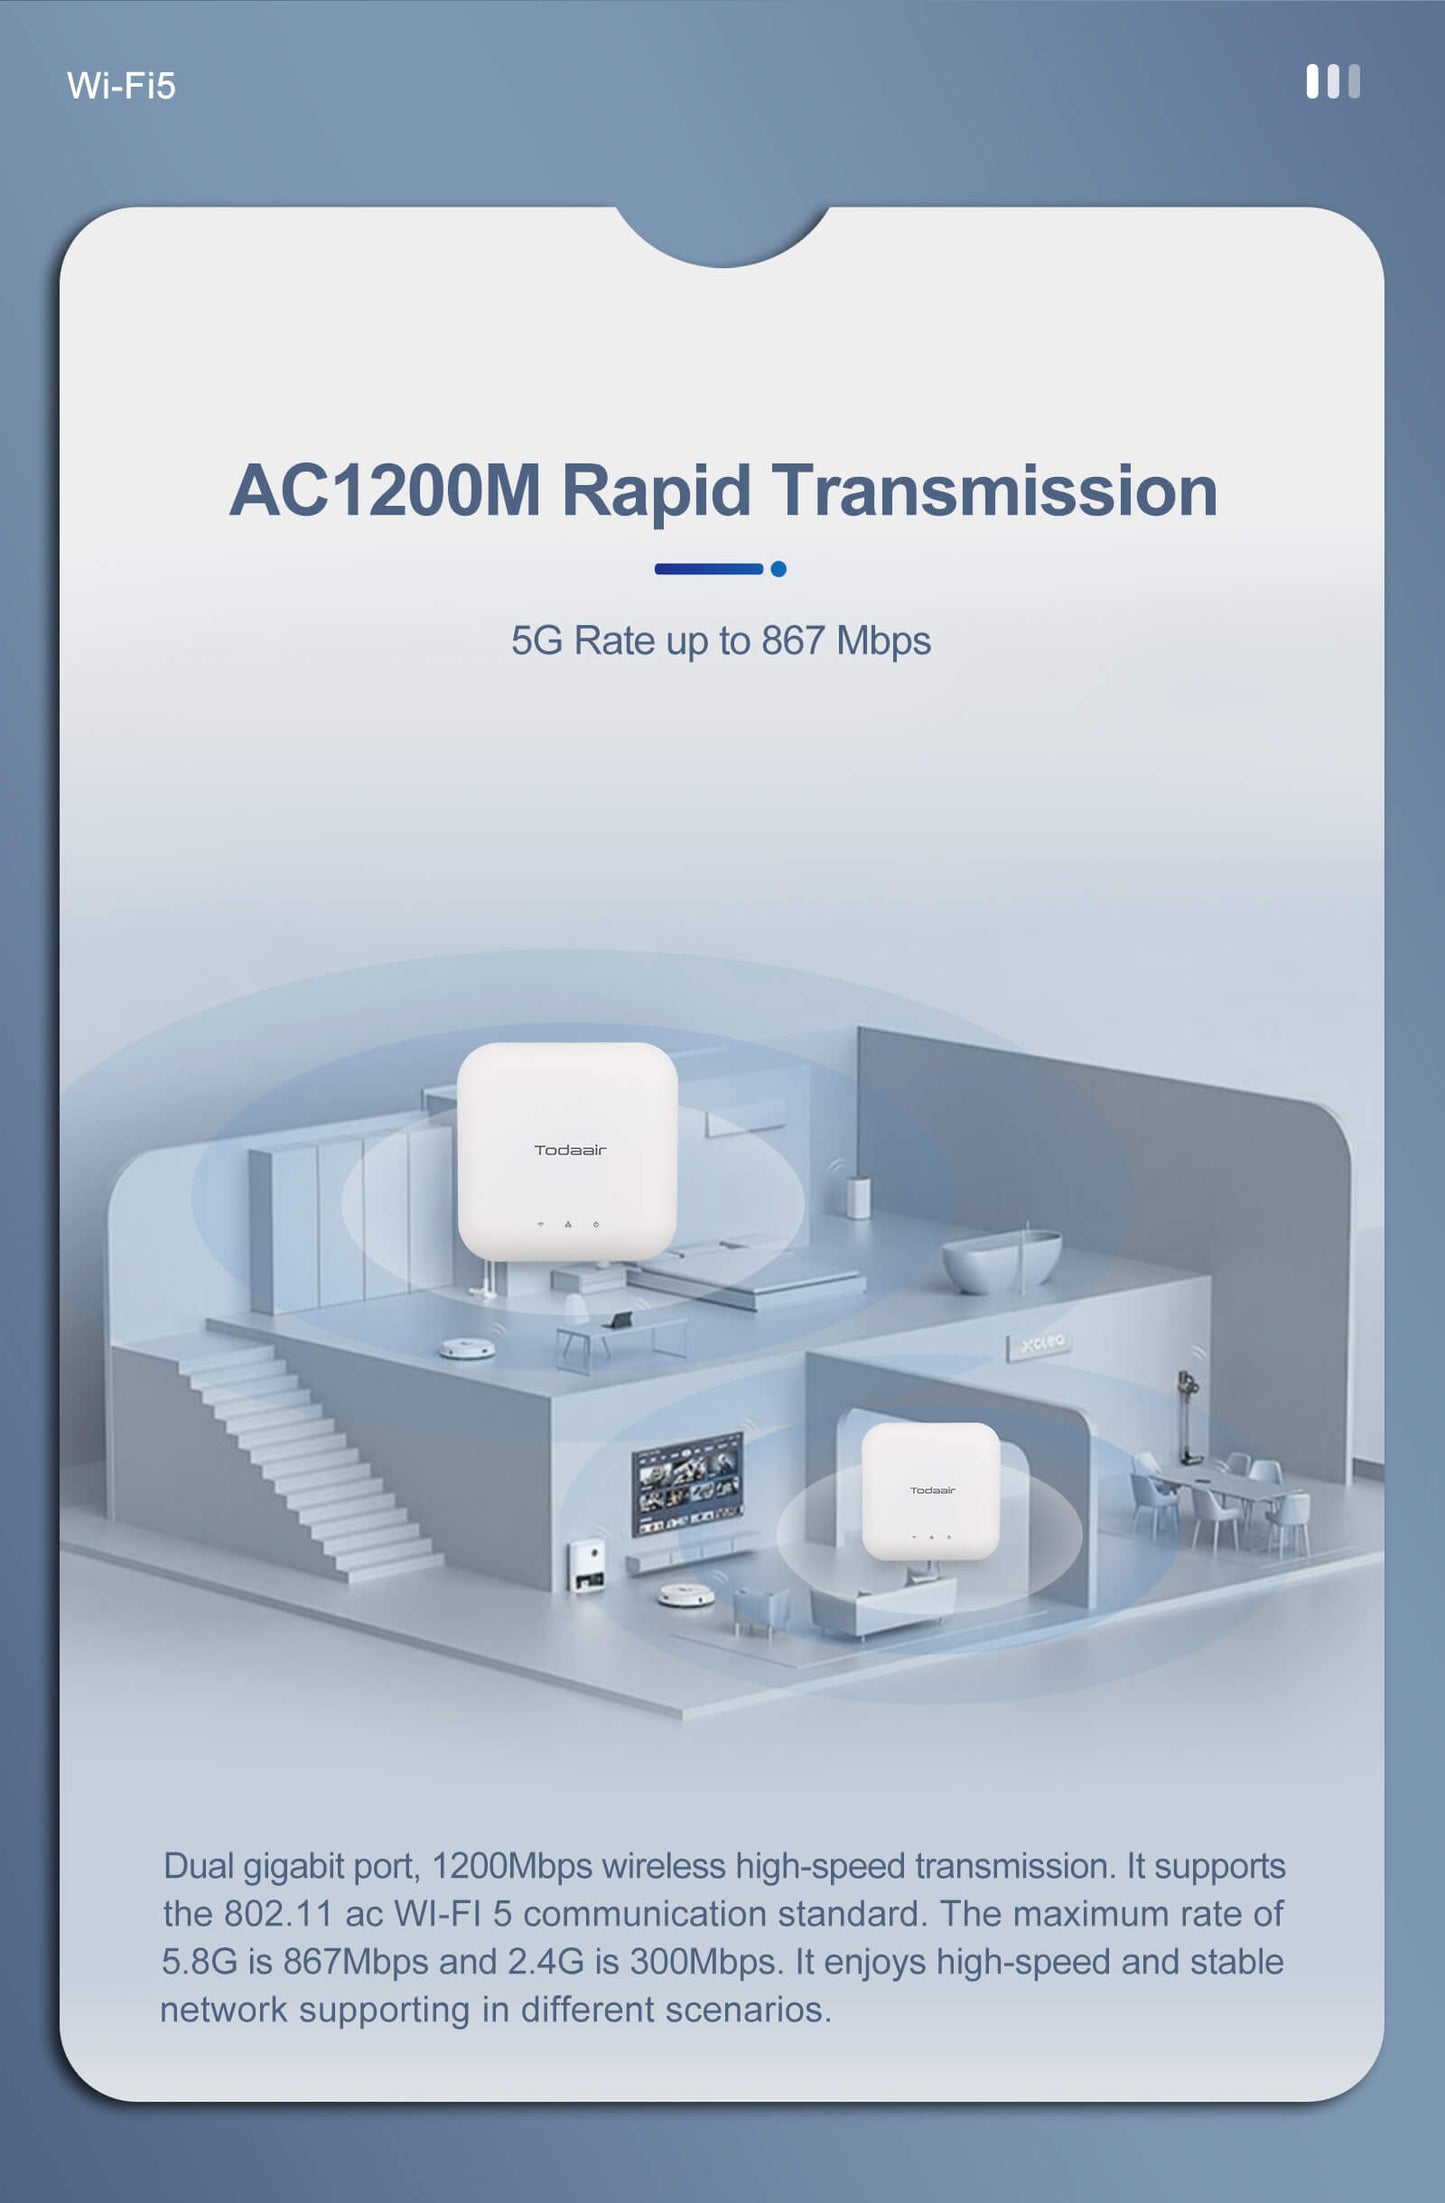 AC1200M rapid transmission